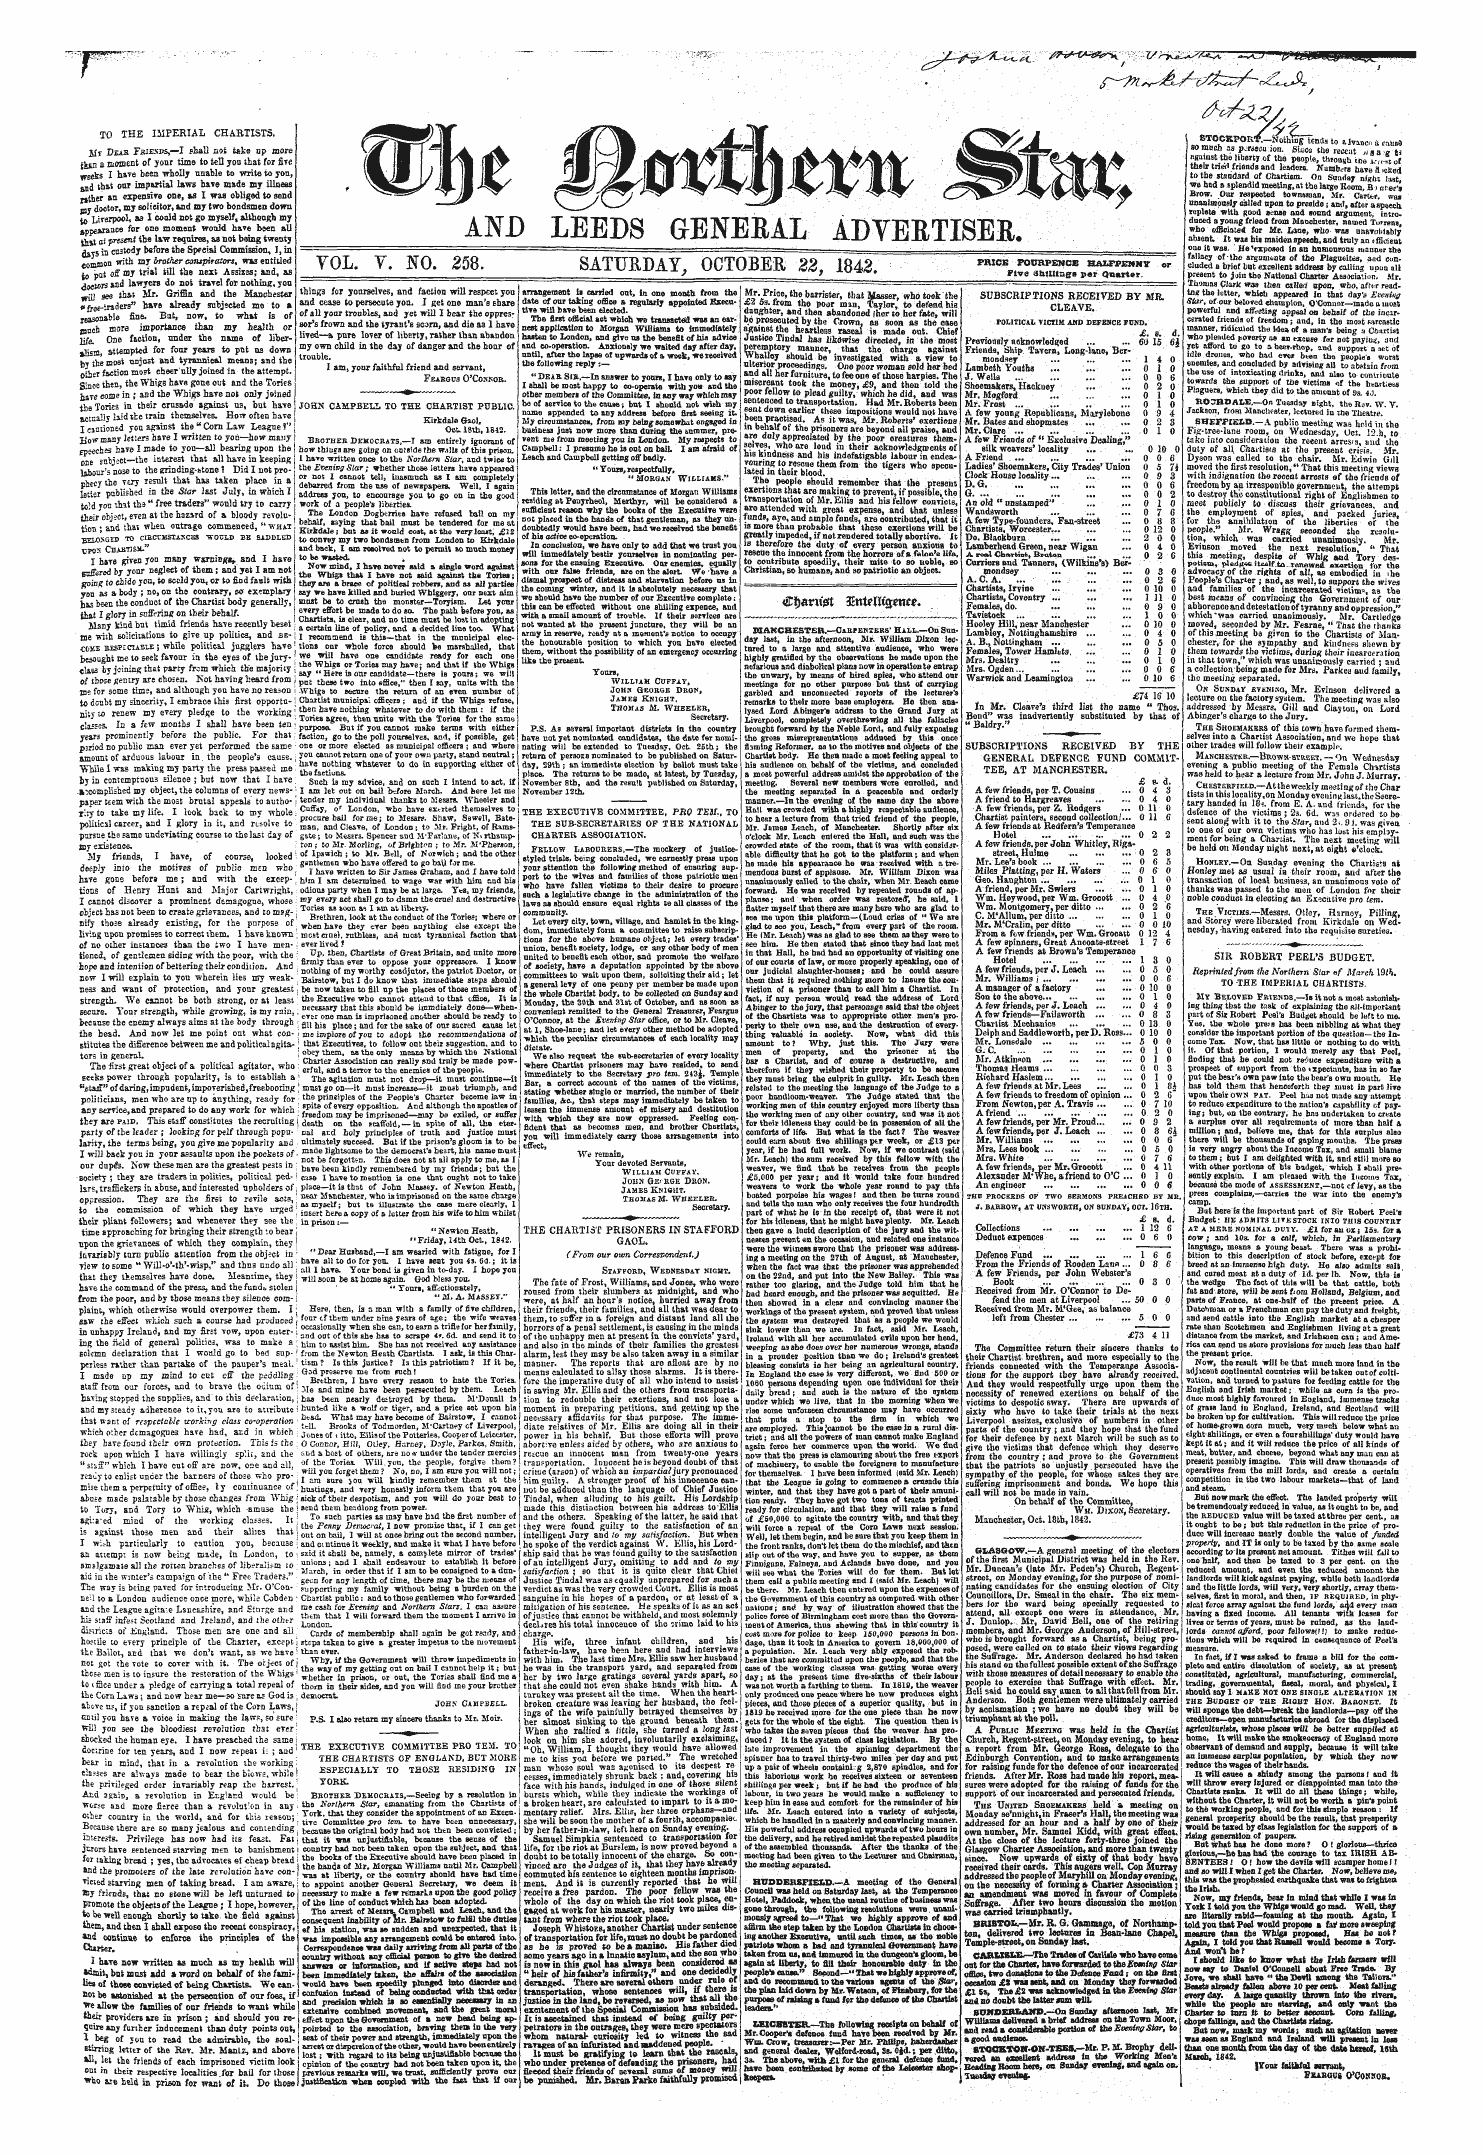 Northern Star (1837-1852): jS F Y, 3rd edition - &Lt;£!)Aritet 3hut*Ui&Ence.